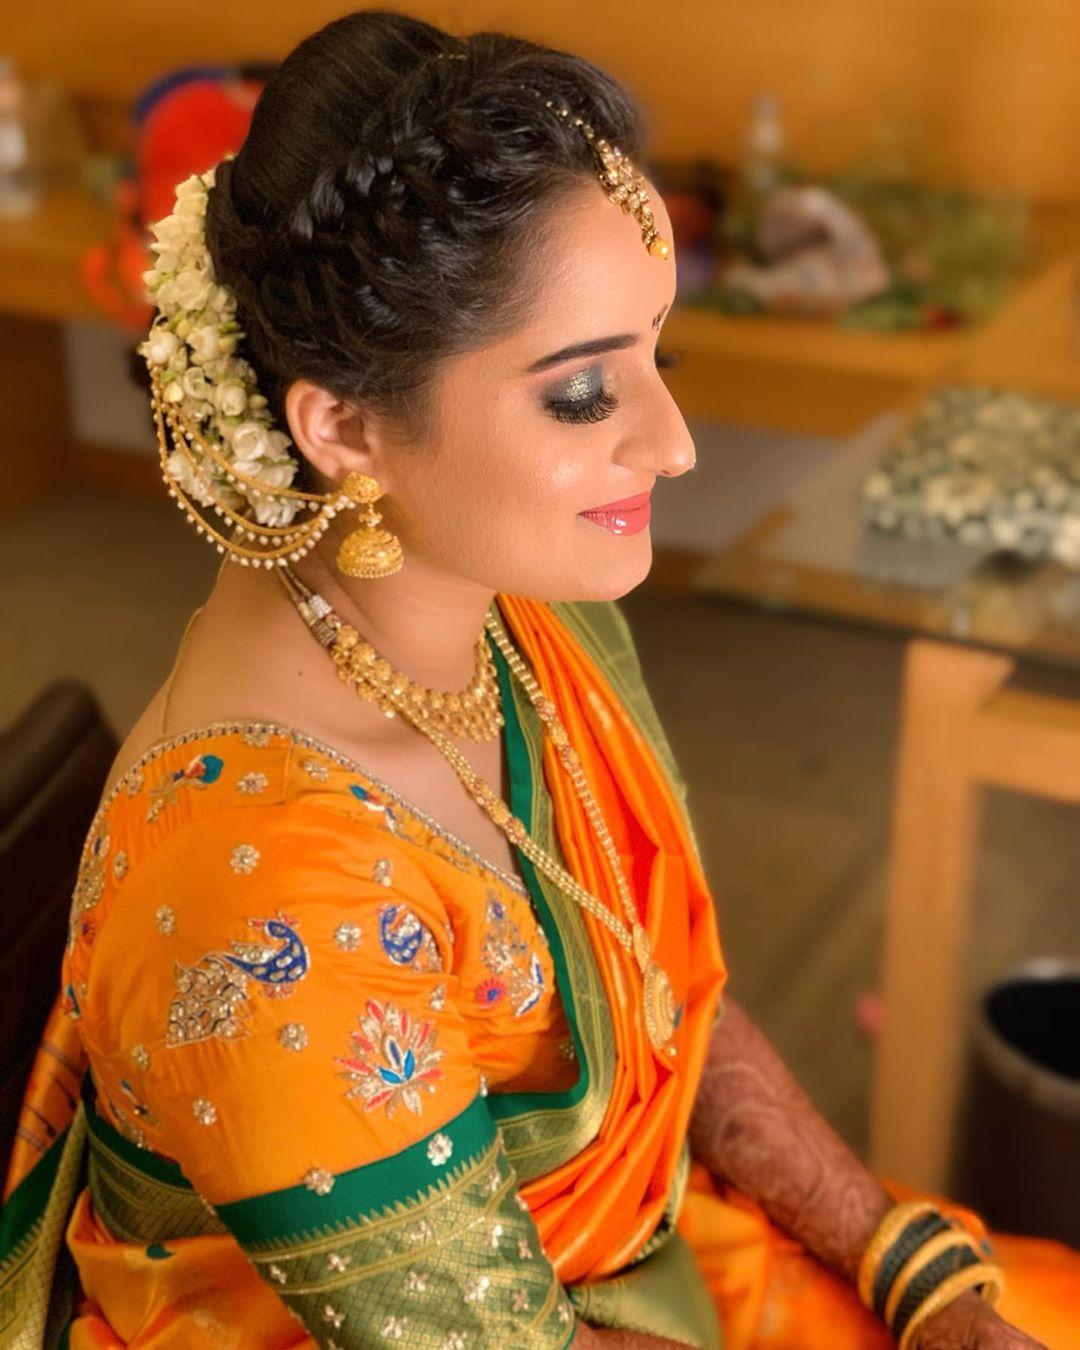 Ambada Hairstyle Designs as Adorned by Real Maharashtrian Brides